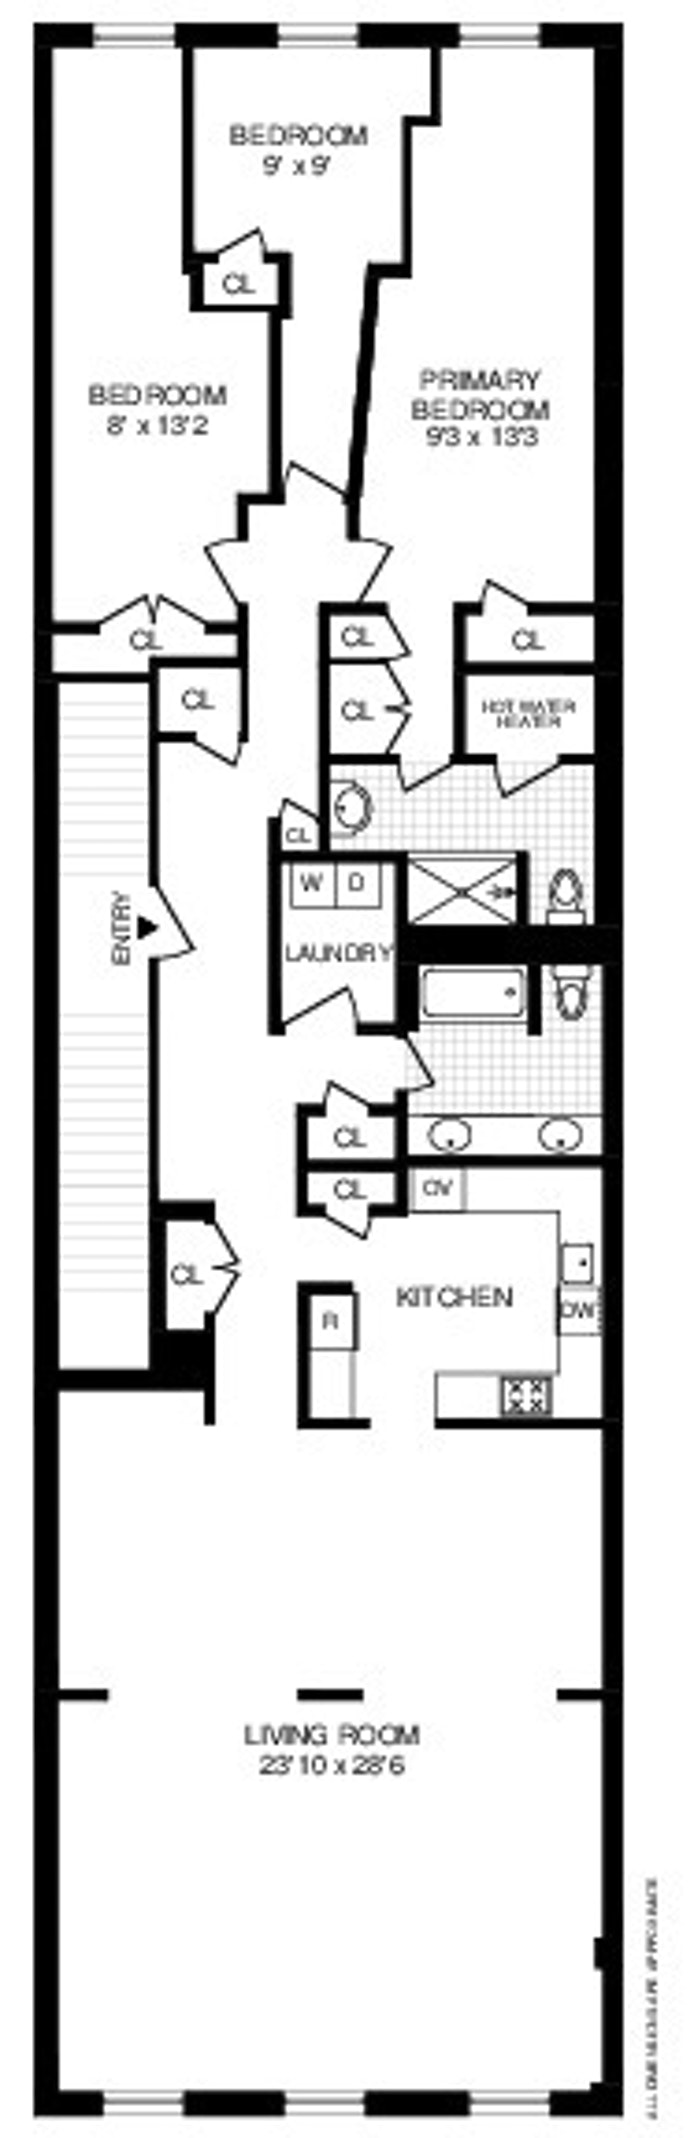 Floorplan for 363 Greenwich Street, 3C